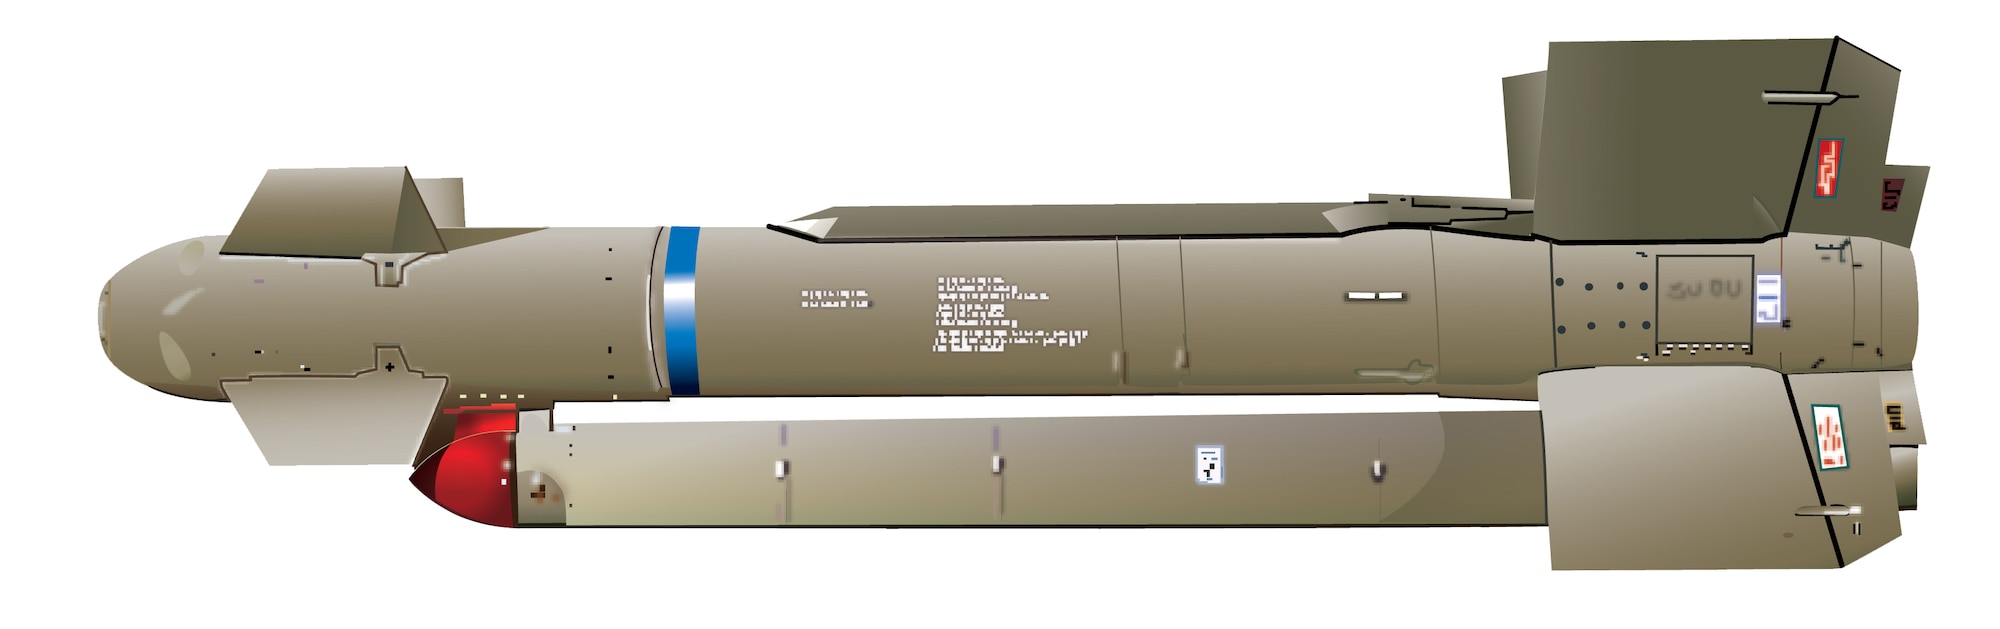 AGM-130 Missile